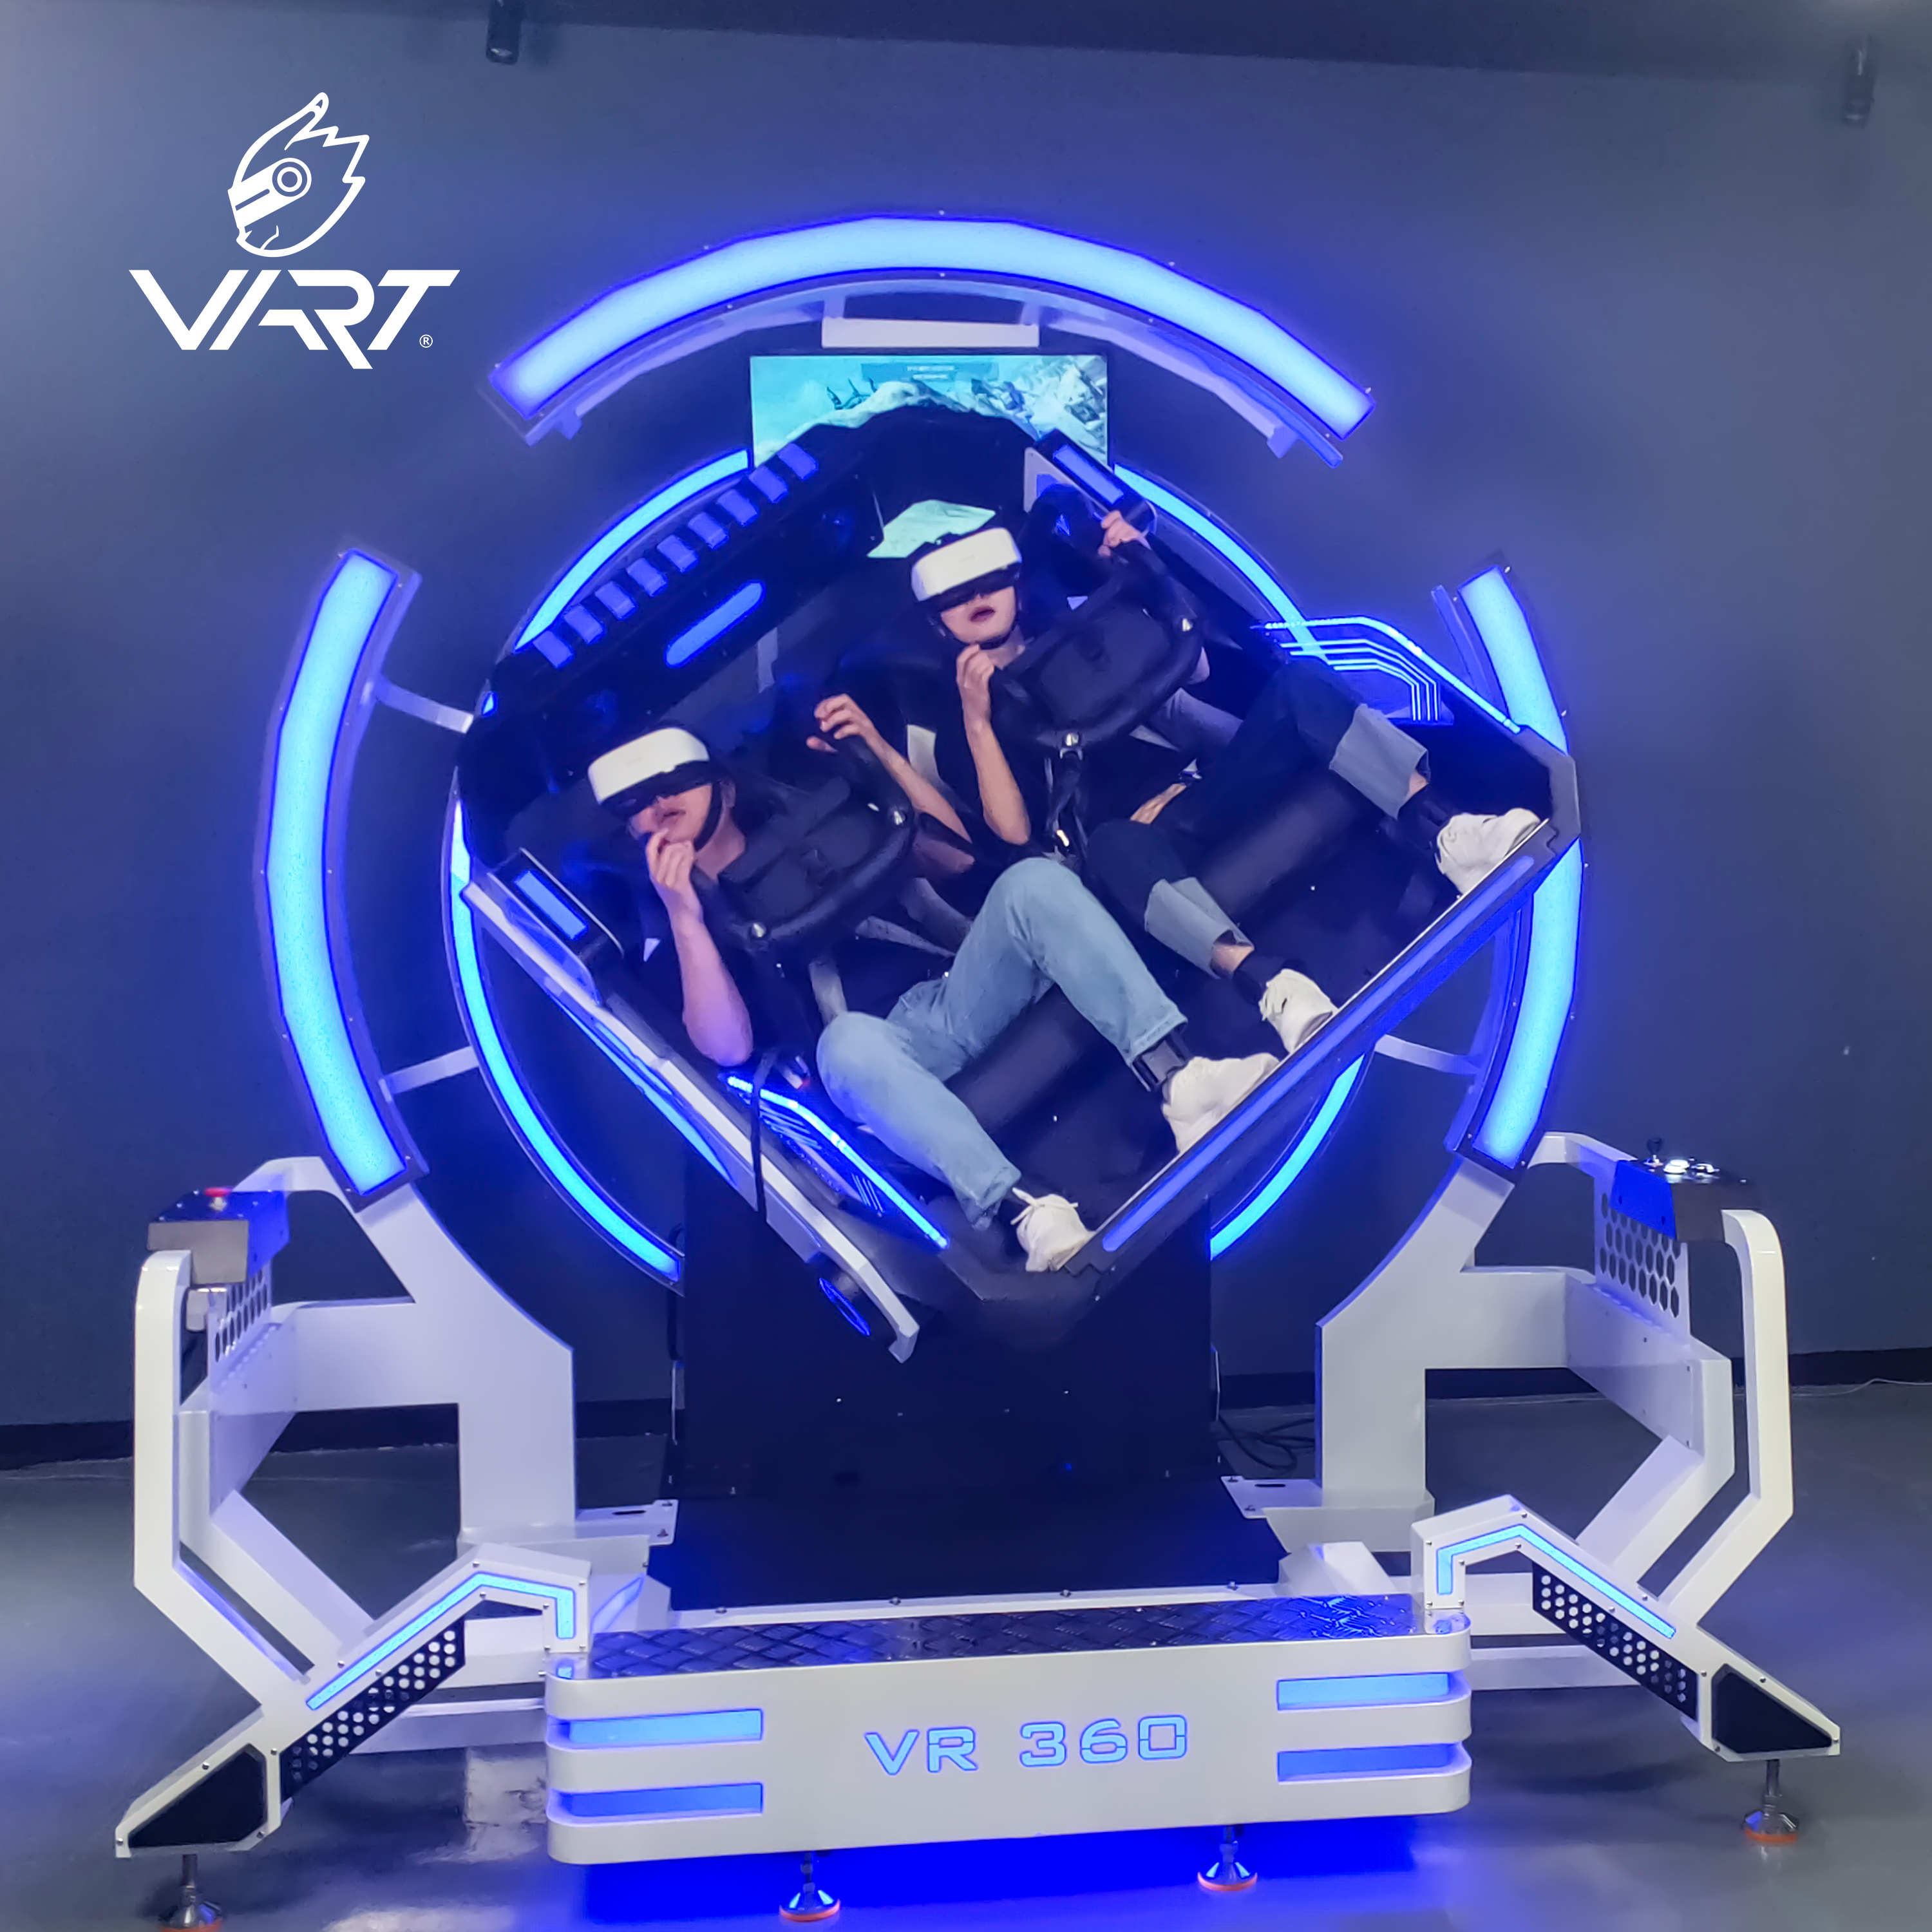 Kumukuai haahaa no 9d Vr 360 Degree Headtracking Roller Coaster Simulator Plus Virtual Reality Vibration 9d Cinema